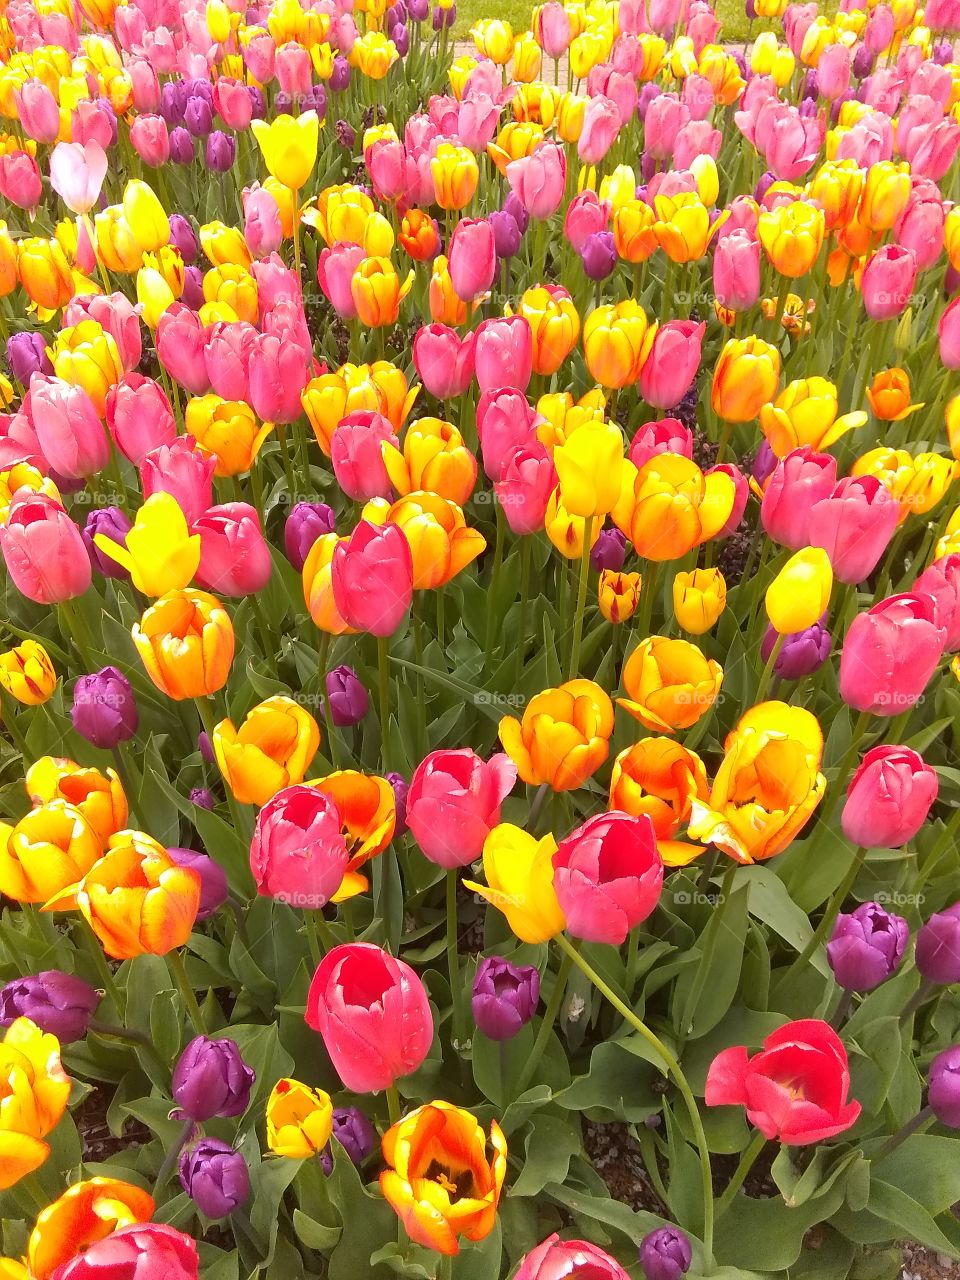 Tulip Festival in Holland, Michigan